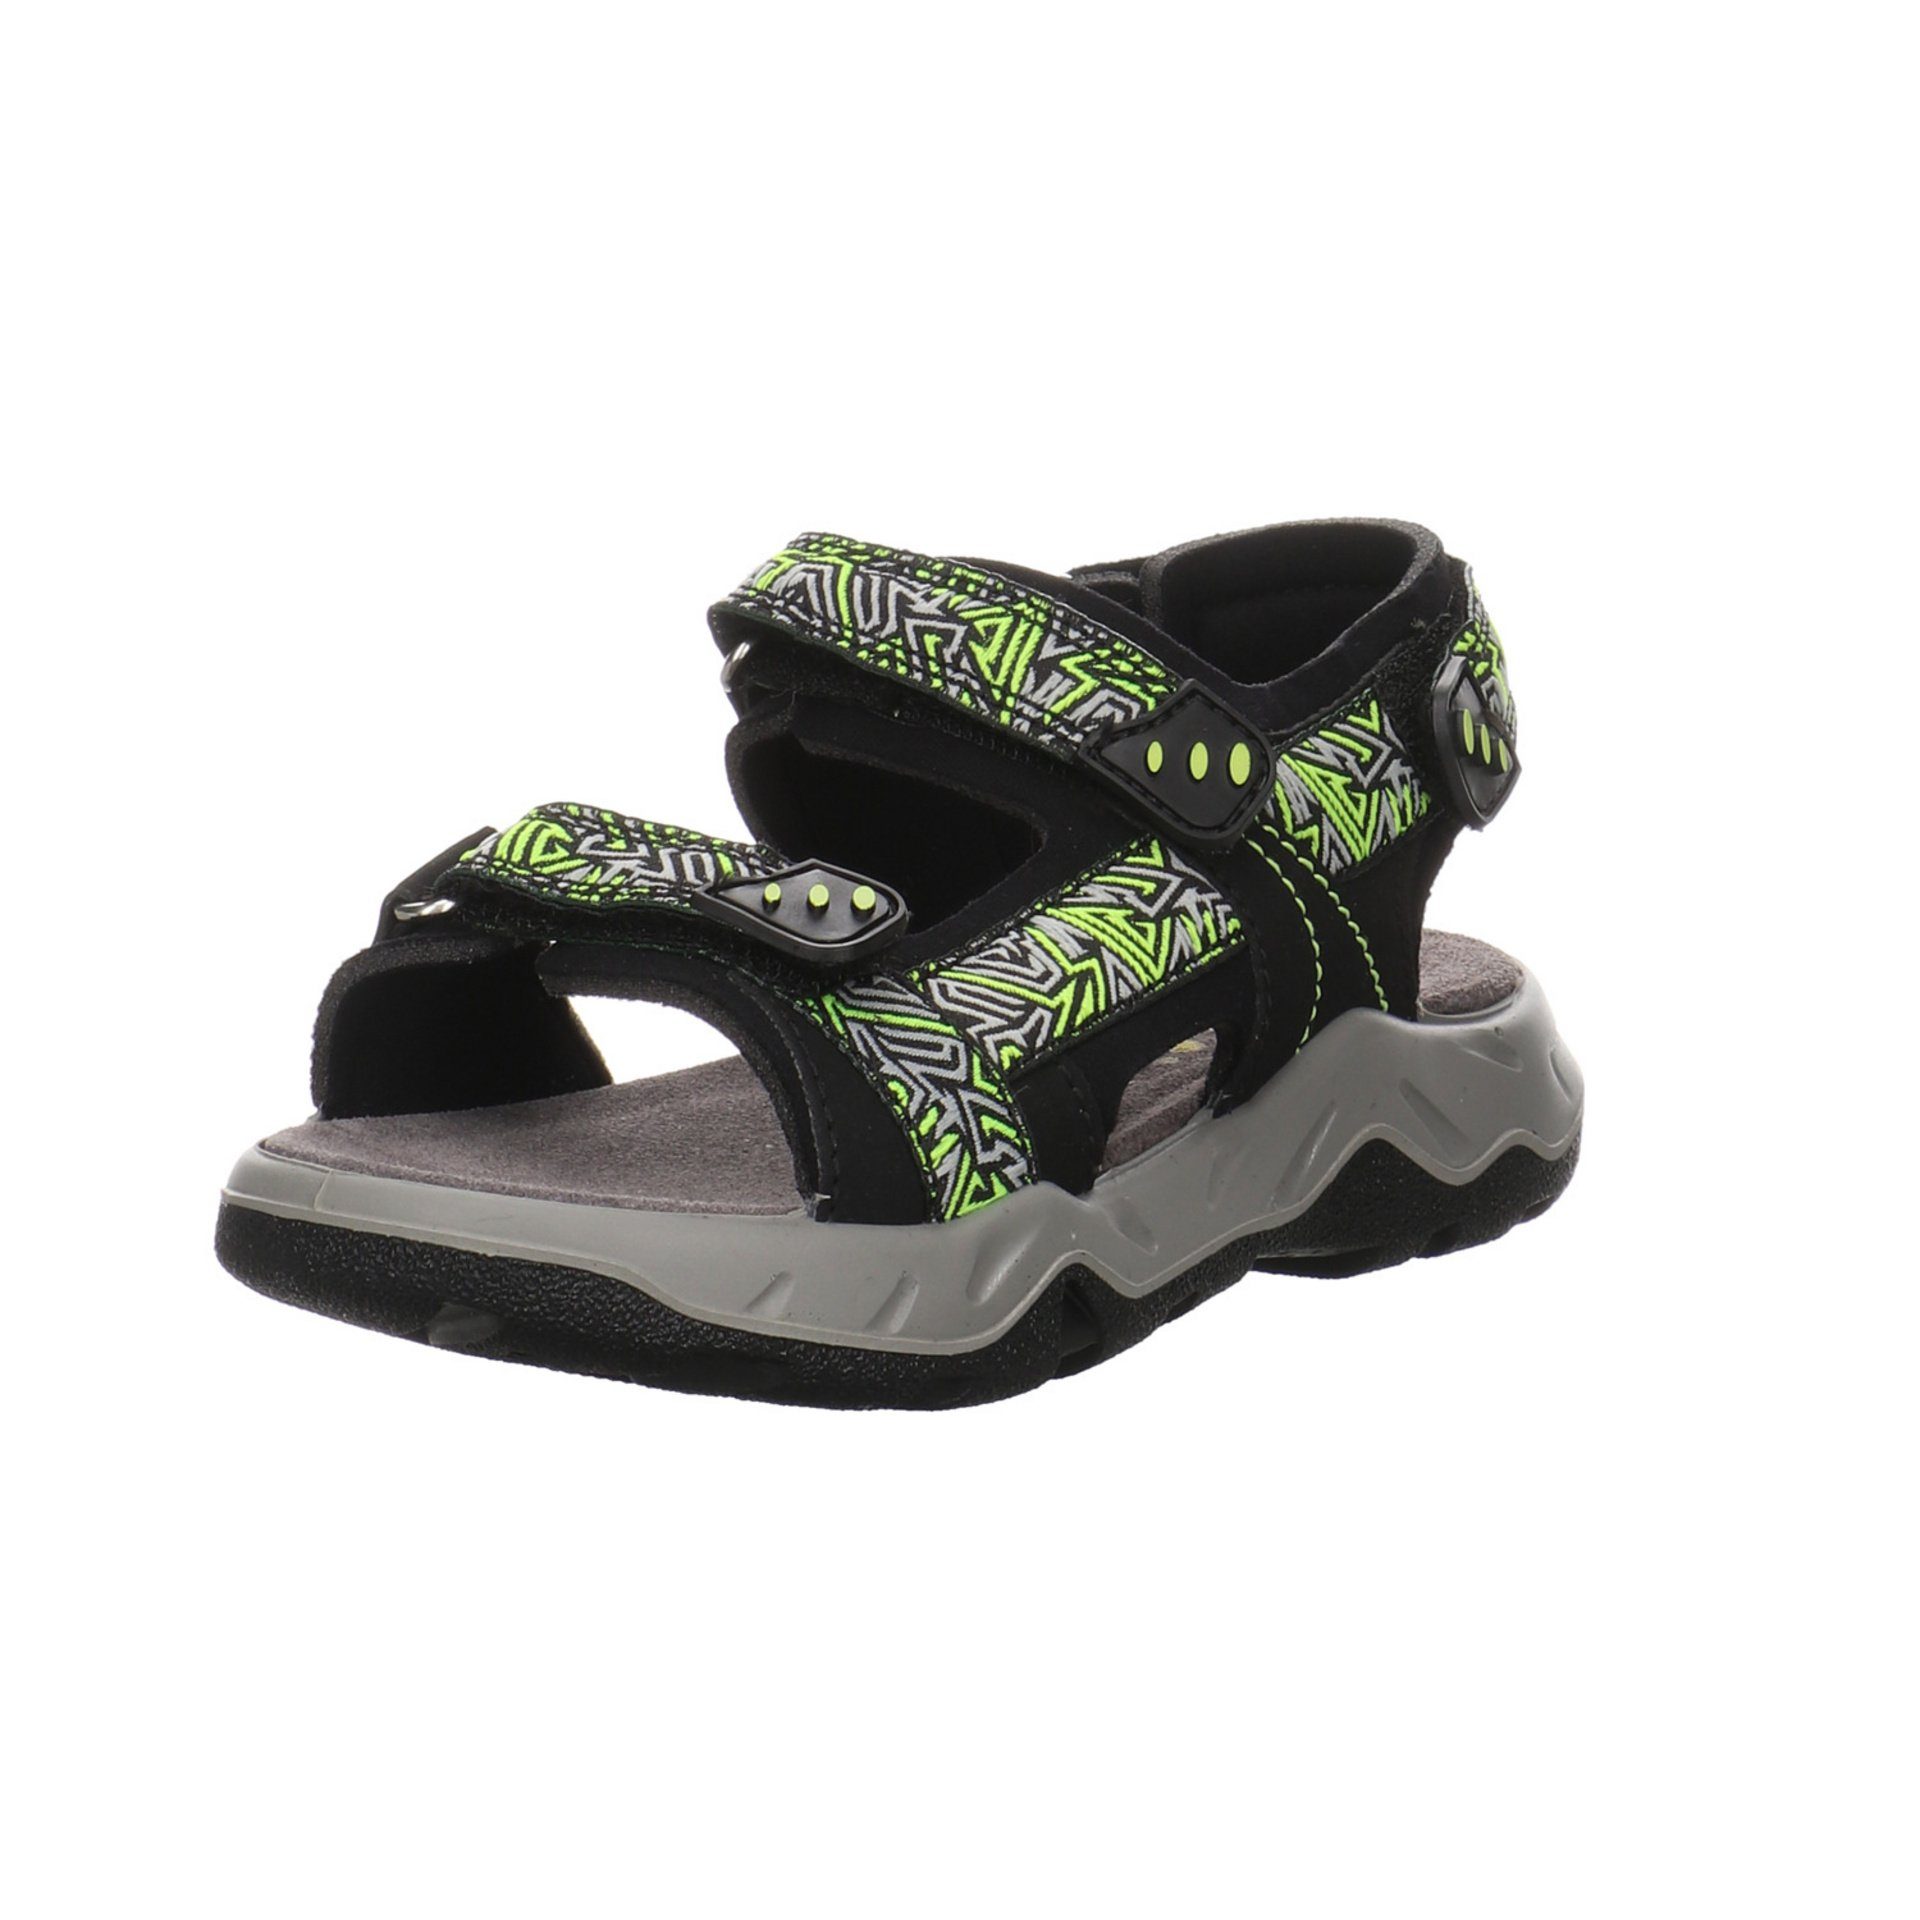 Salamander Lurchi Jungen Schuhe Multi Sandale Black Odono Sandalen Sandale Synthetikkombination Kinderschuhe